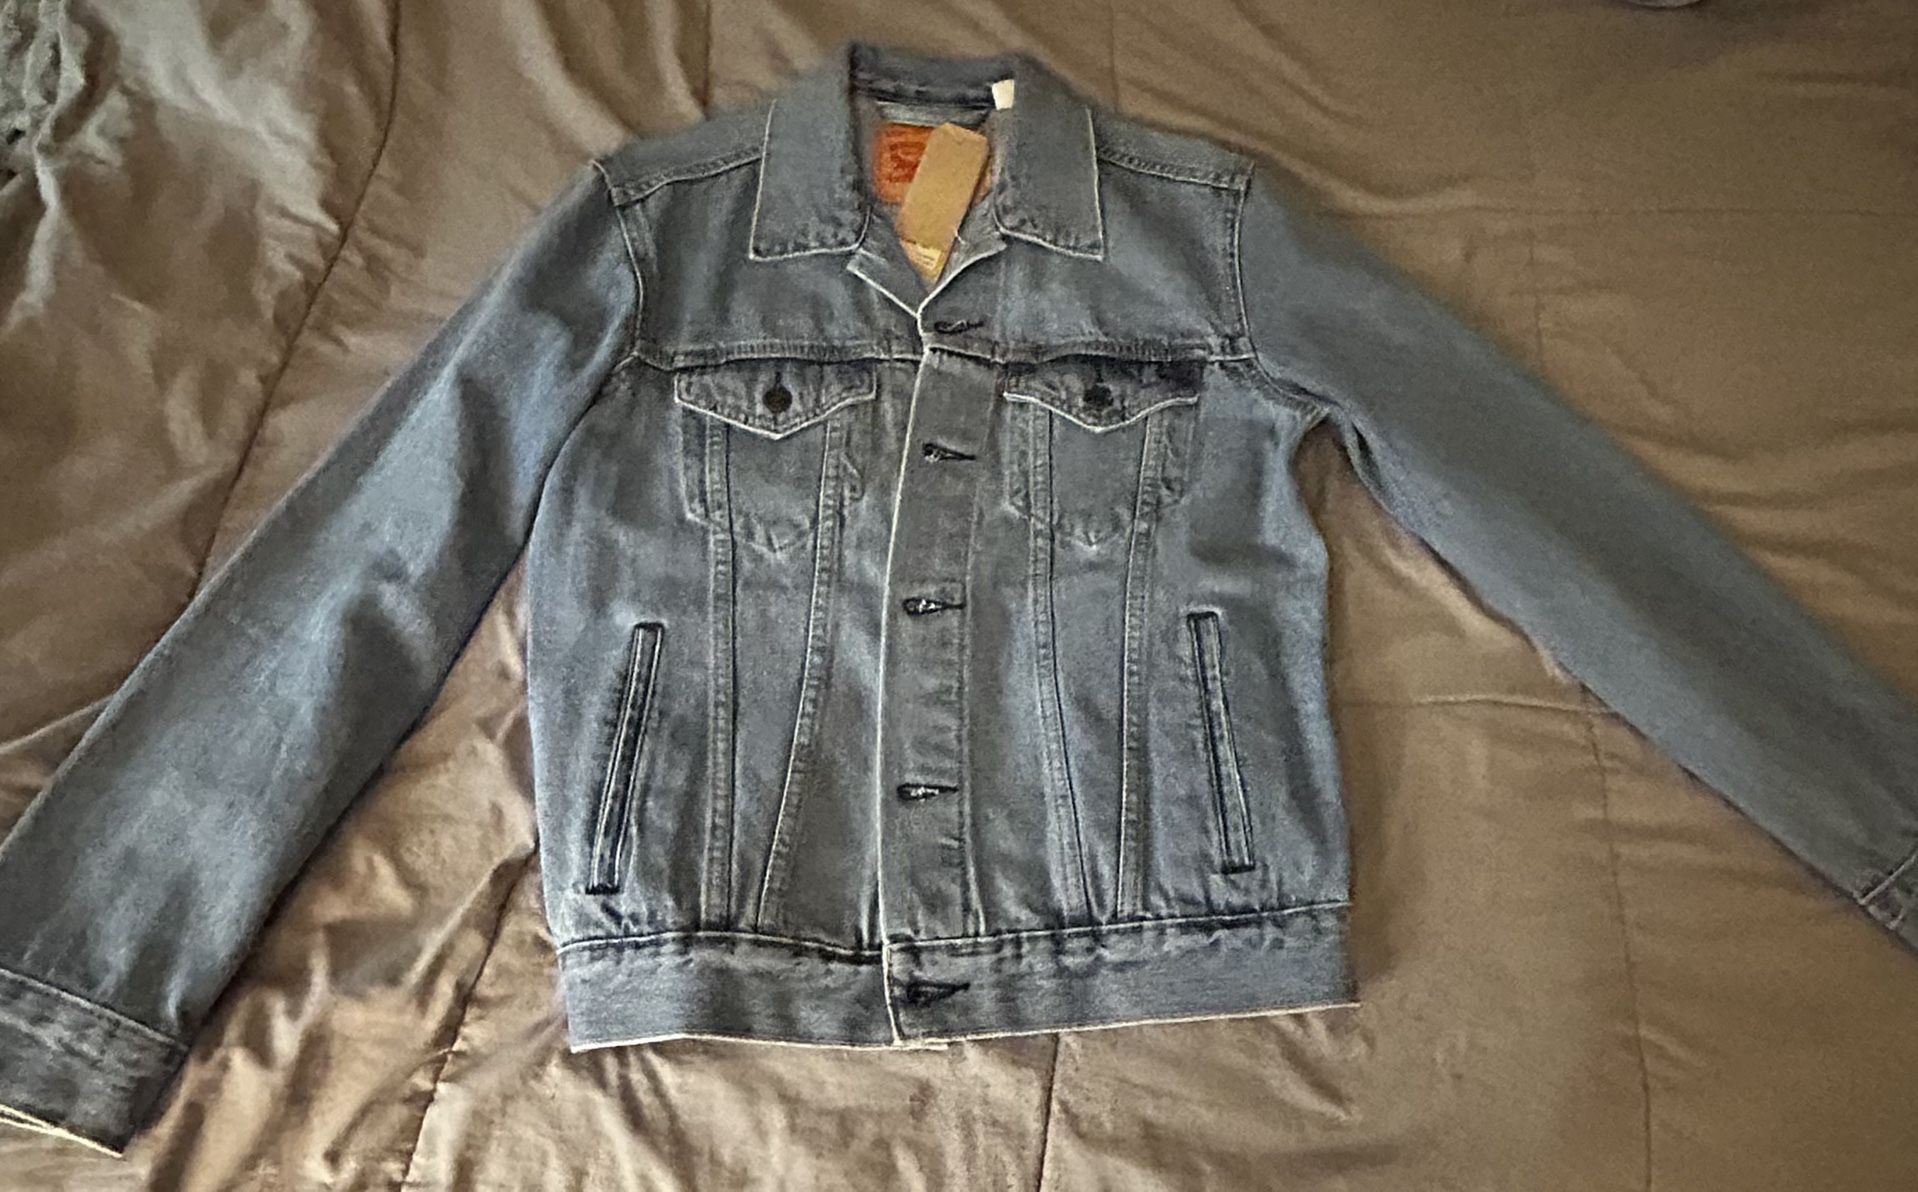 Brand new Levi’s Jean jacket